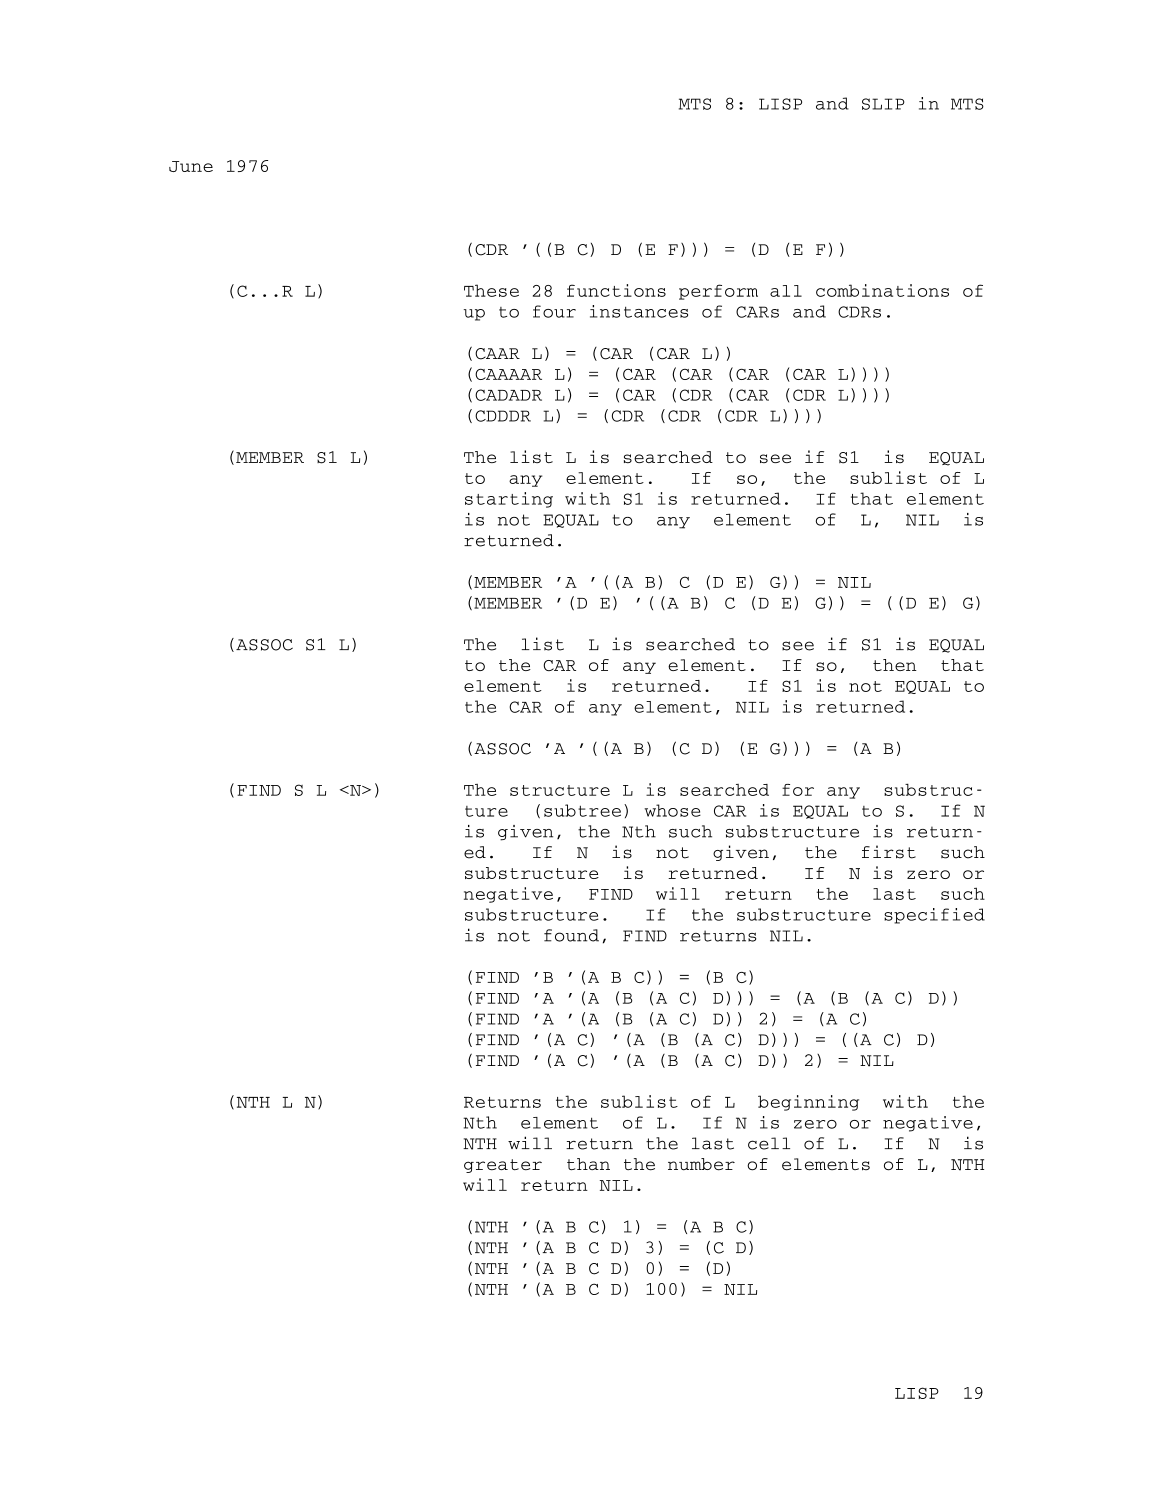 MTS Volume 8 - LISP and SLIP page 18